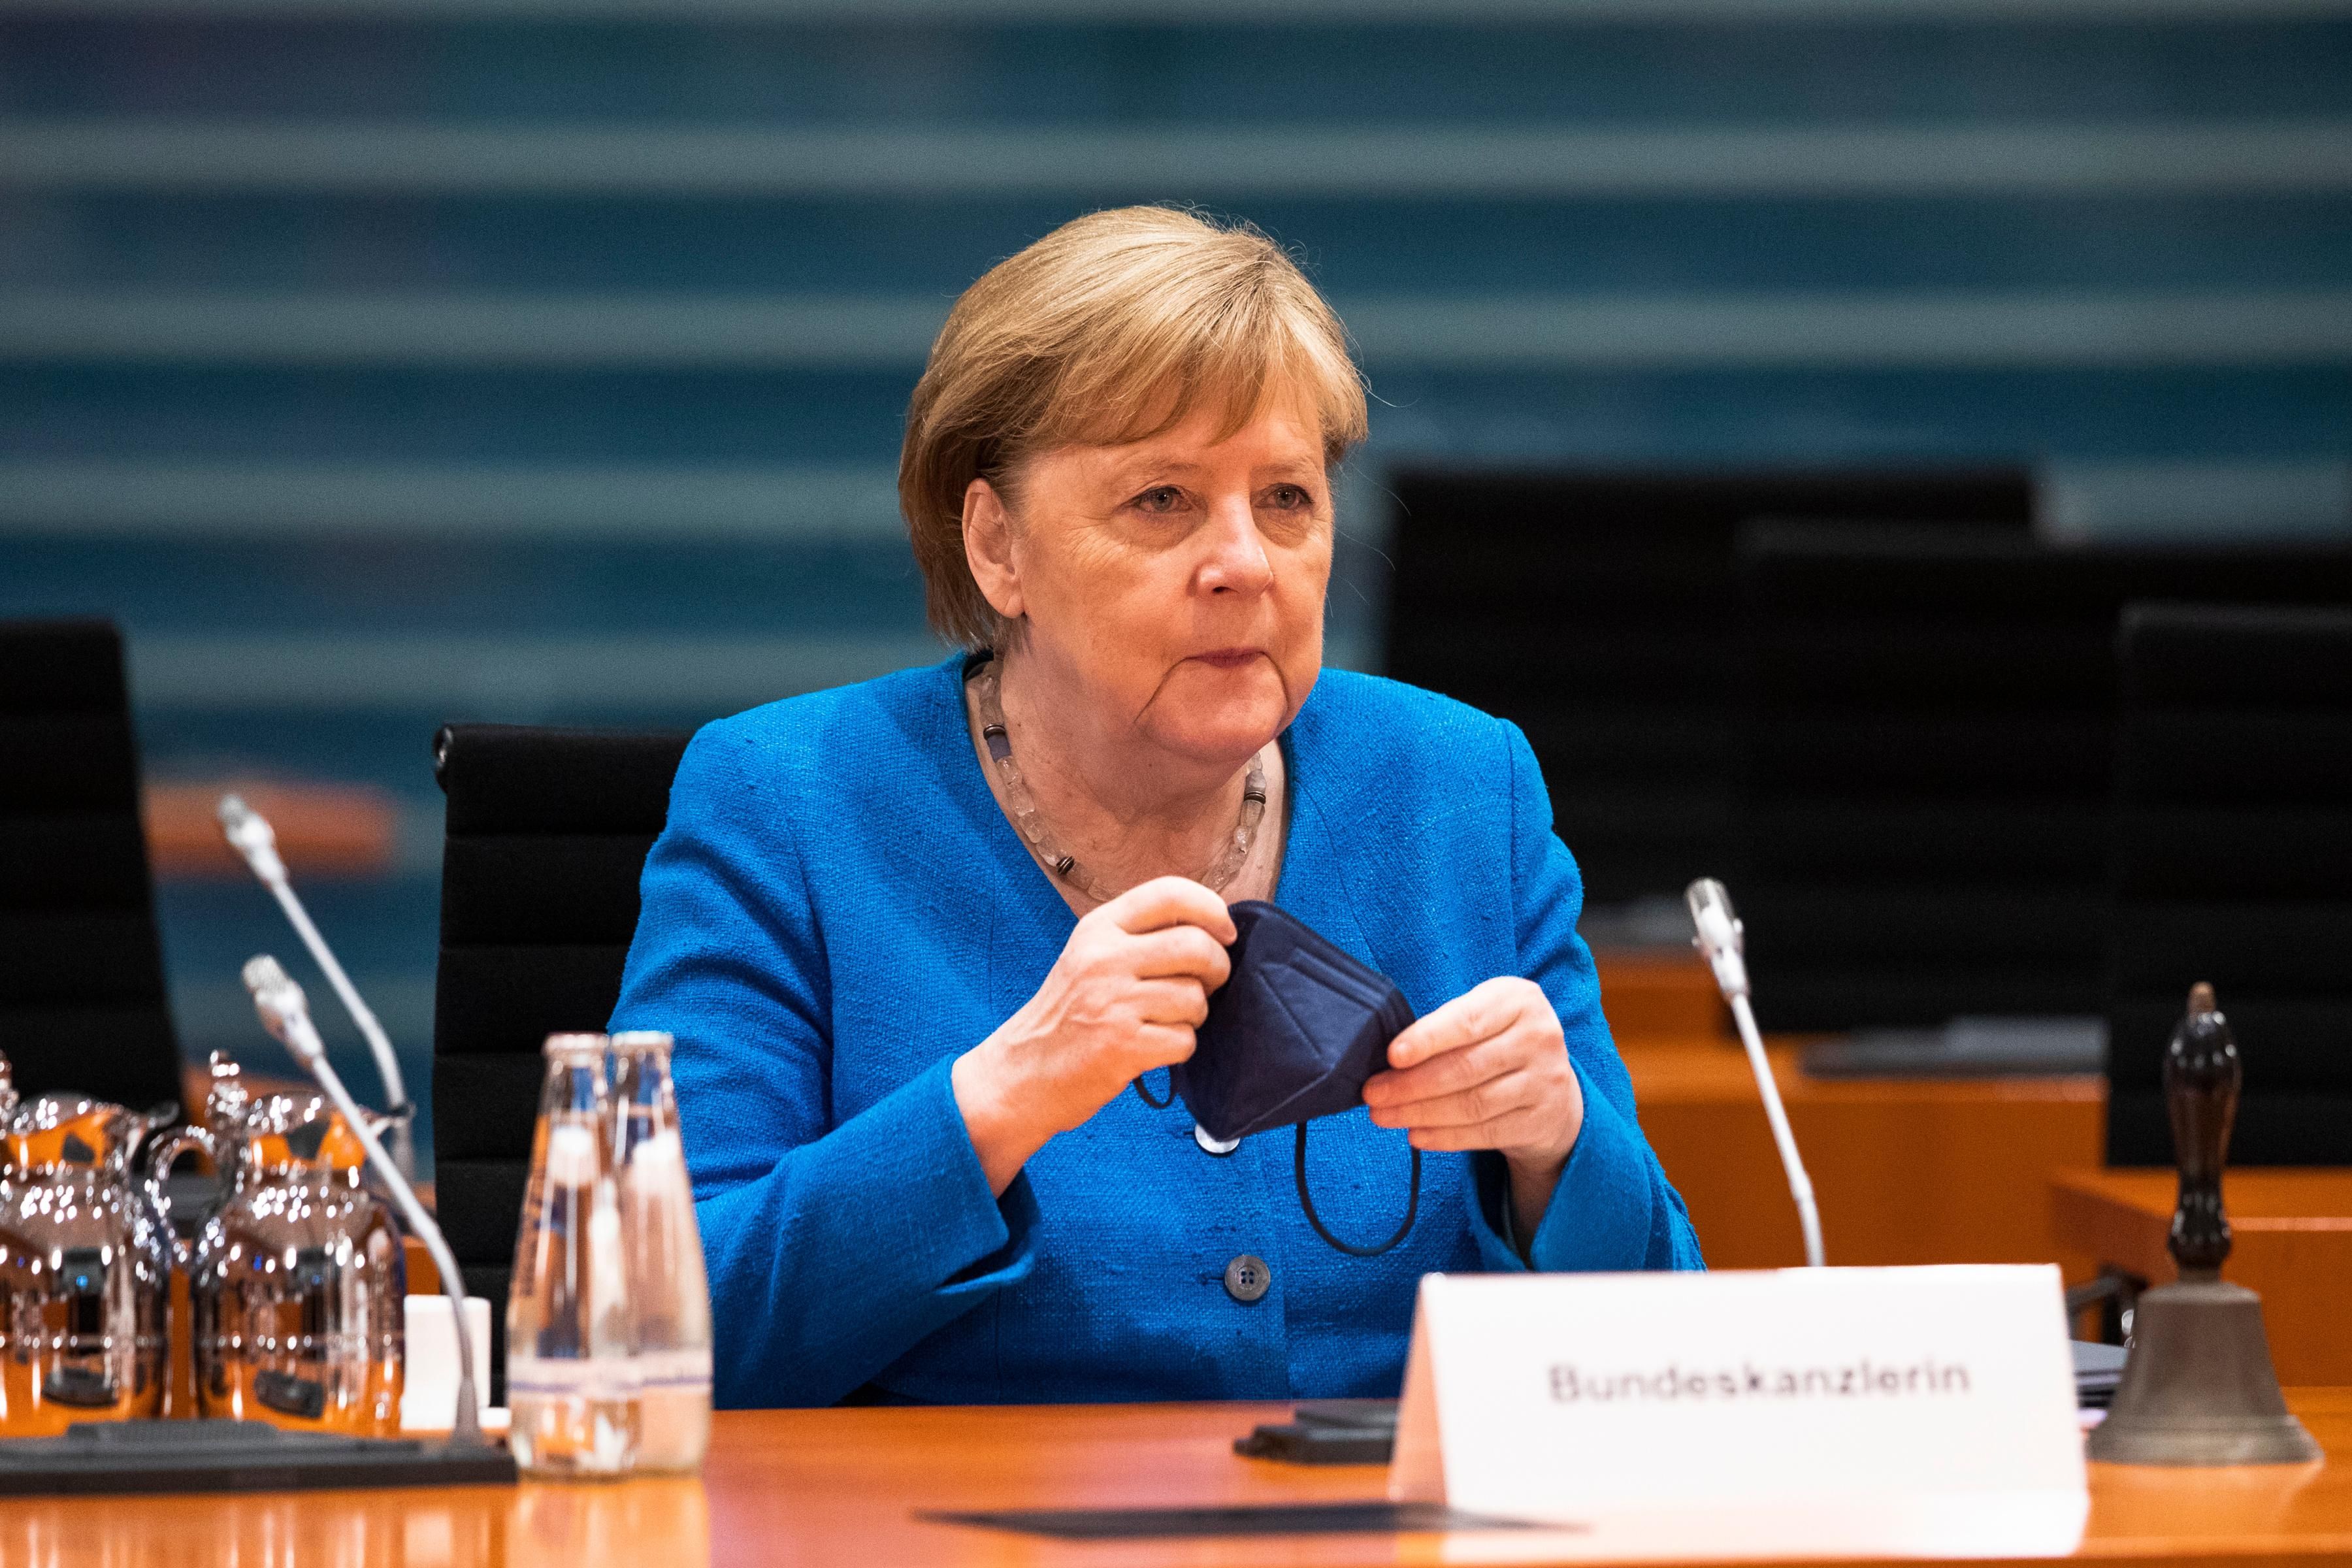 Angela Merkel arrives at a cabinet meeting